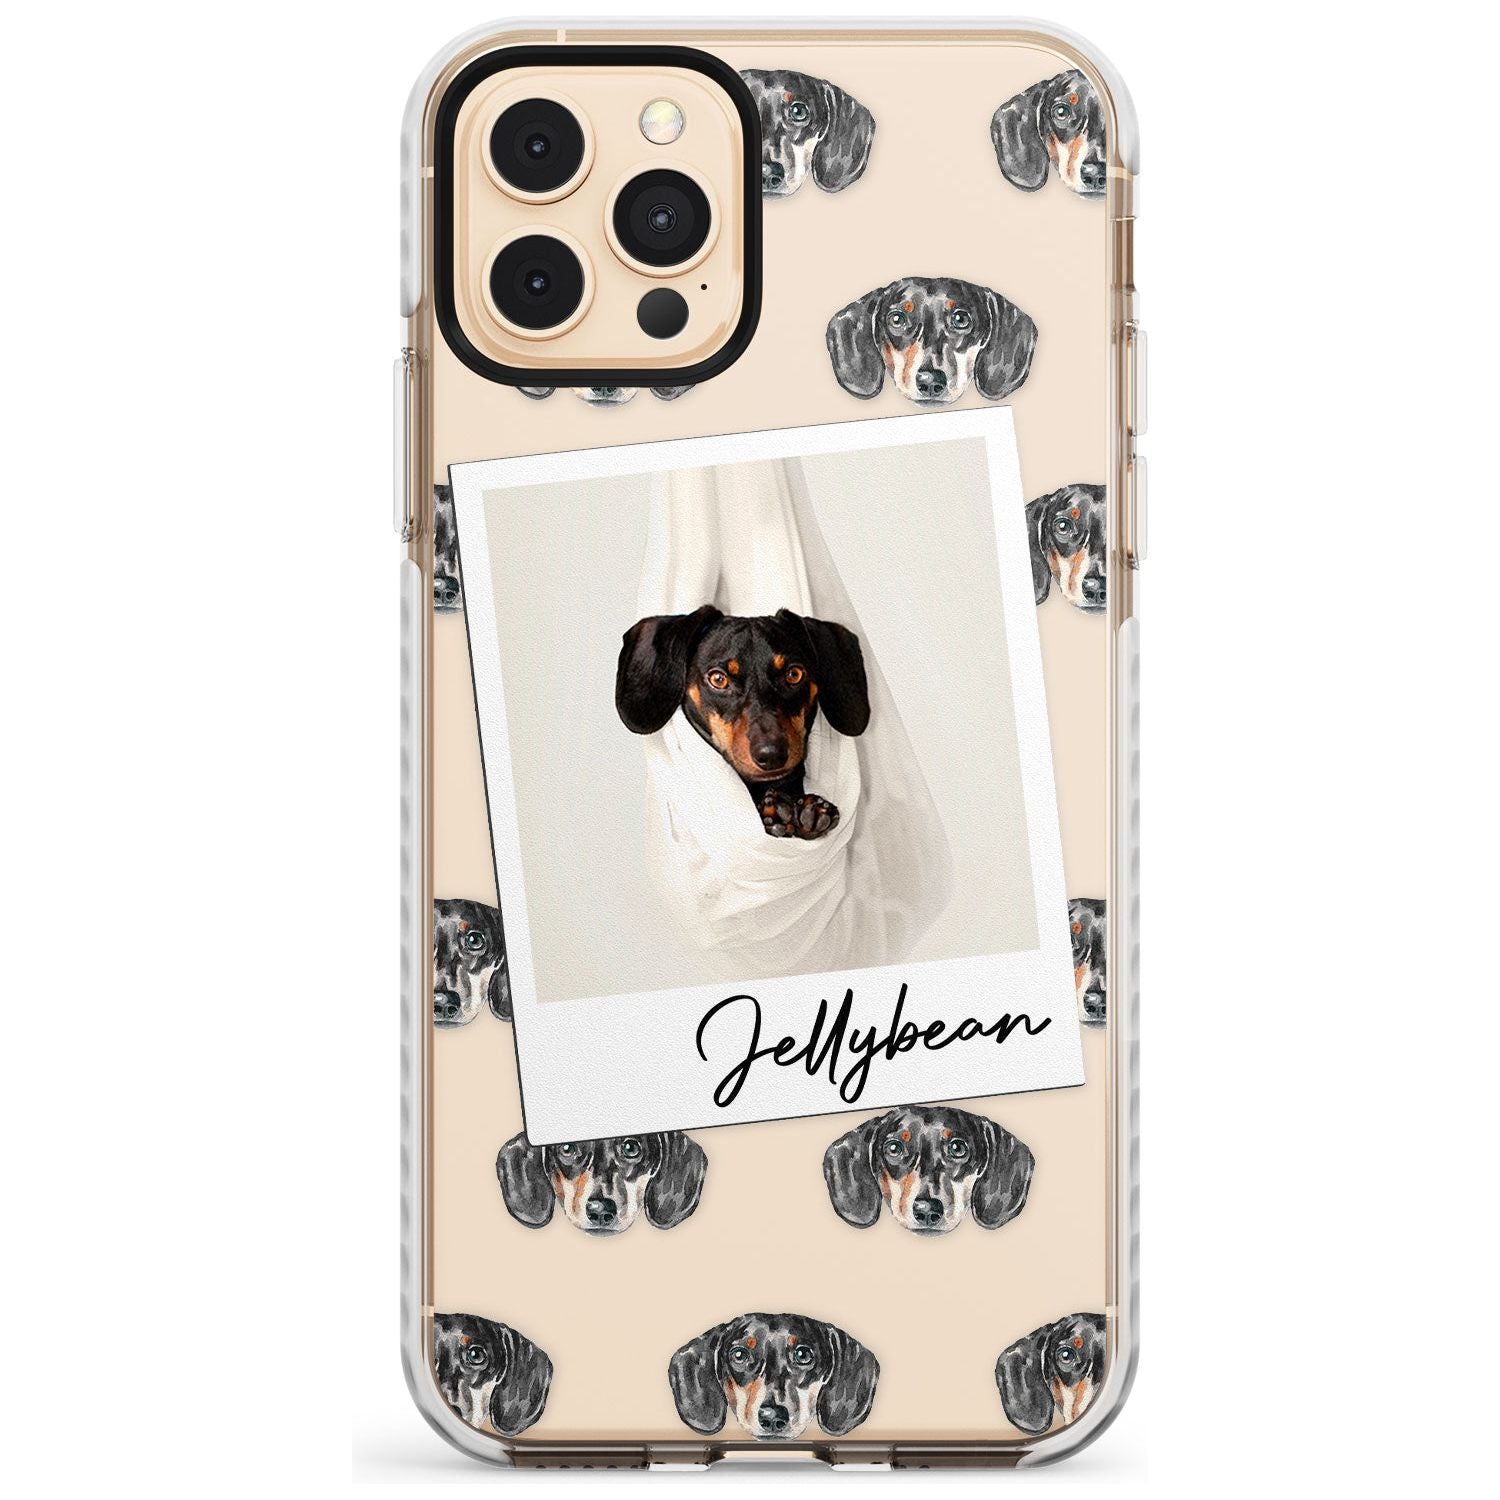 Dachshund, Black- Custom Dog Photo Slim TPU Phone Case for iPhone 11 Pro Max